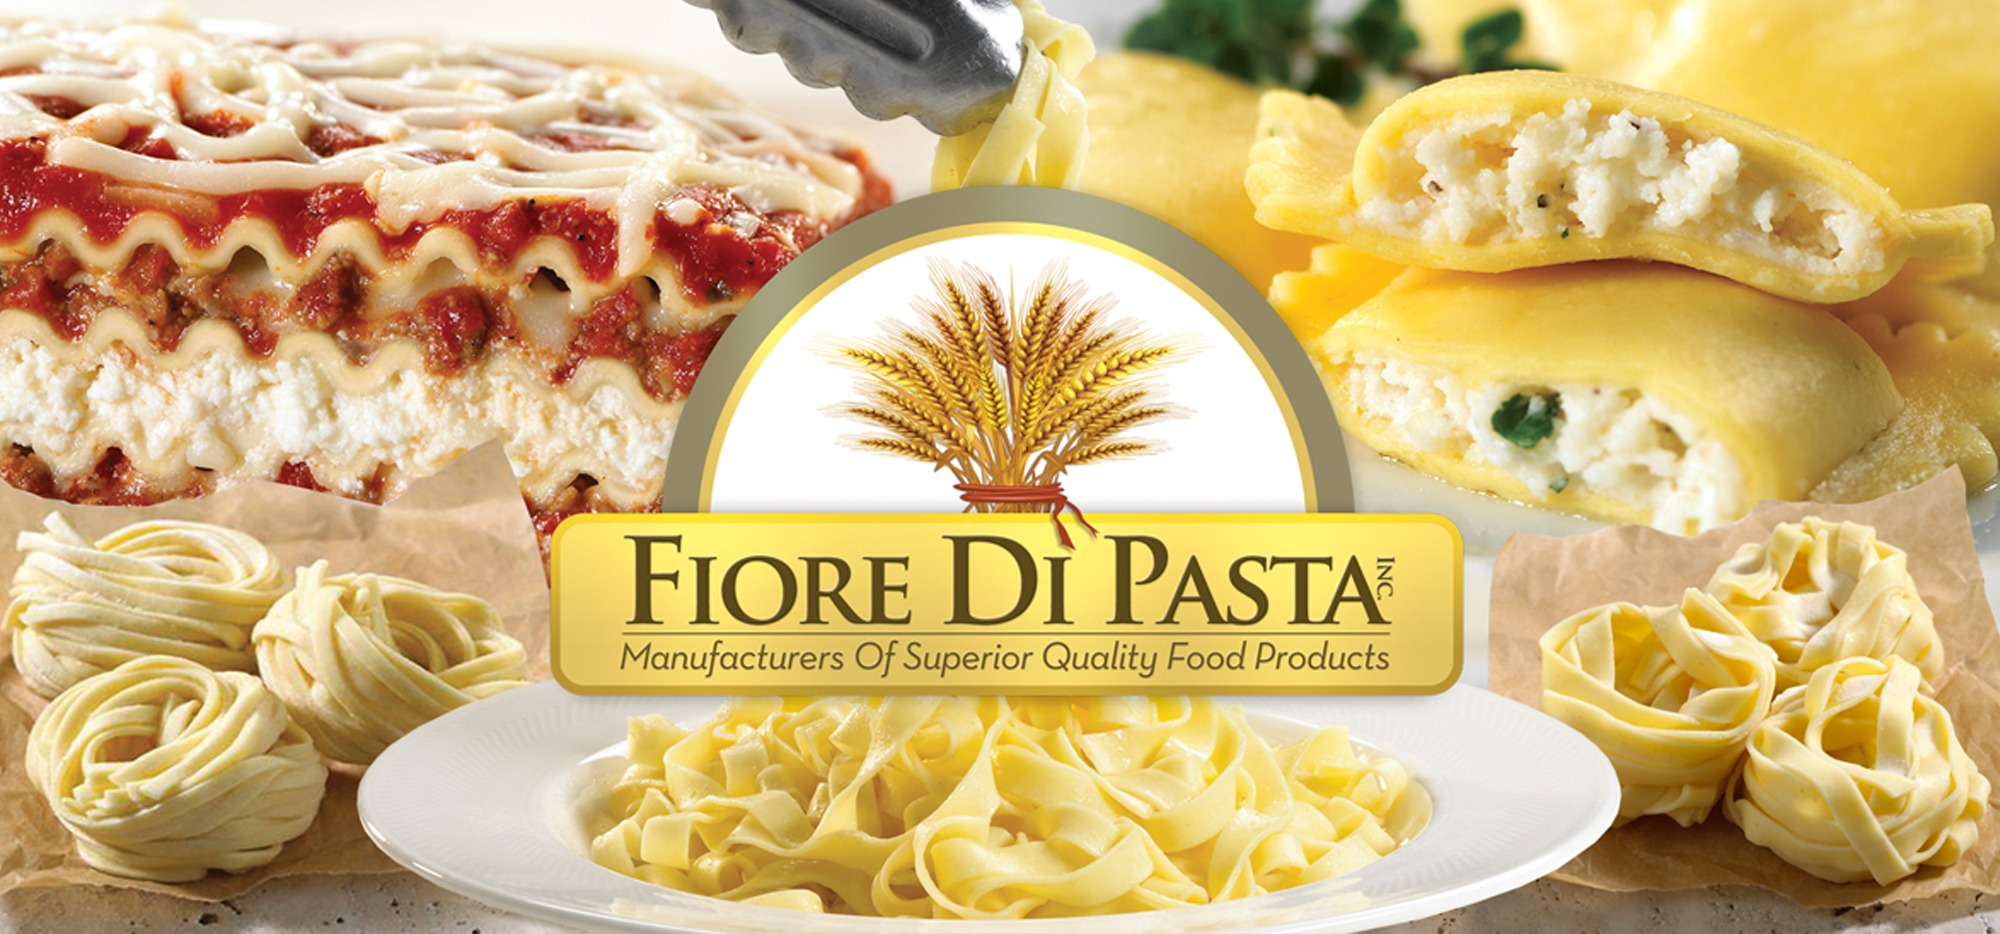 Fiore Di Pasta Brand Inspiration by Octane Advertising Design.